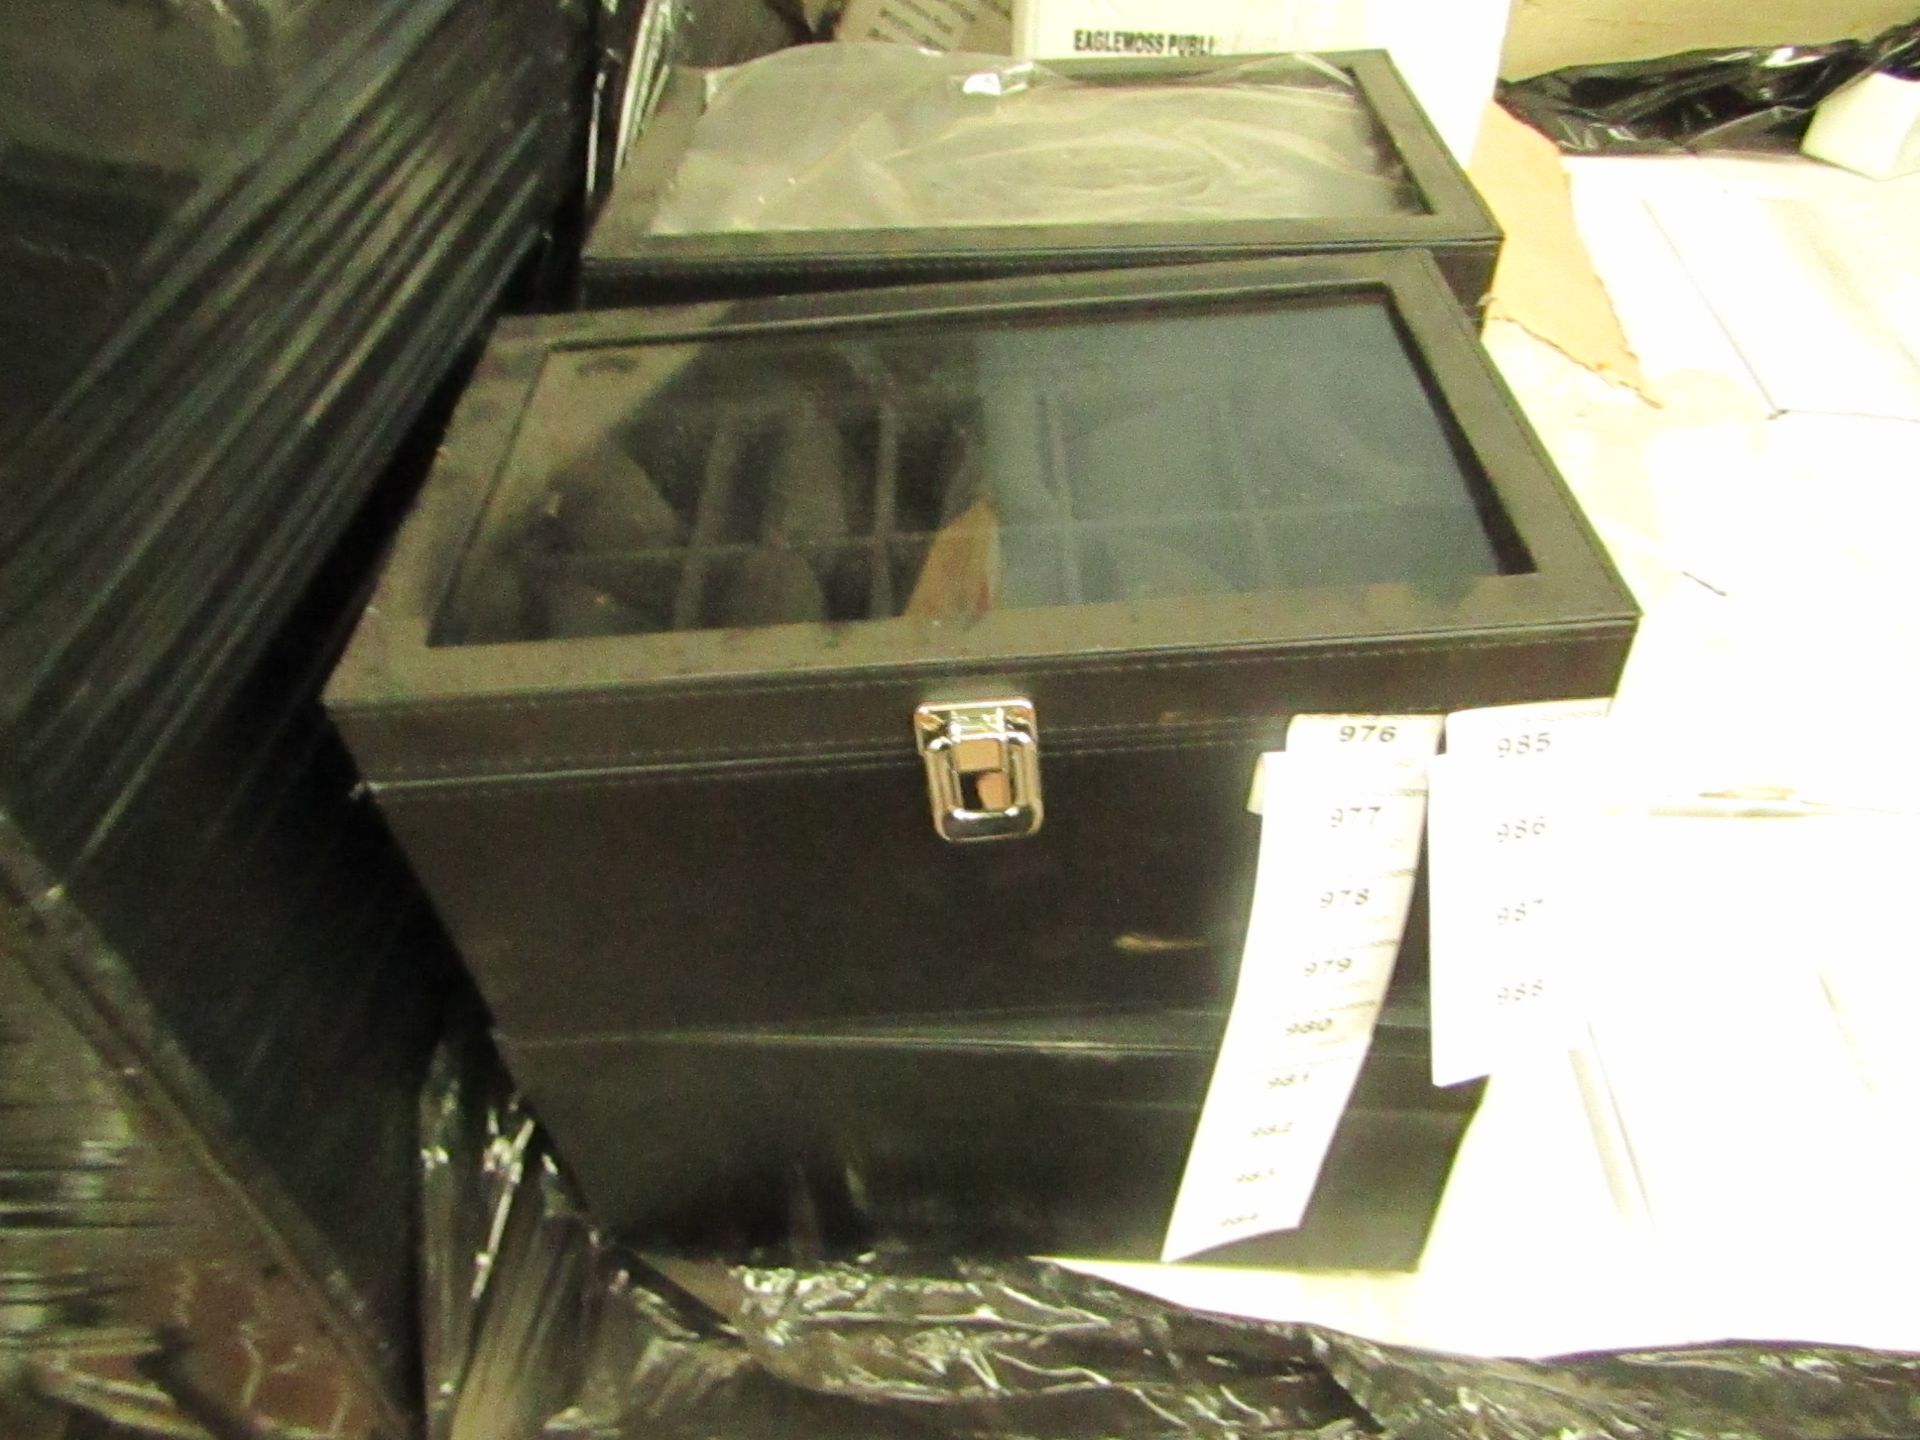 2x Black 10 Compartment Jewellery Box - New & Boxed.